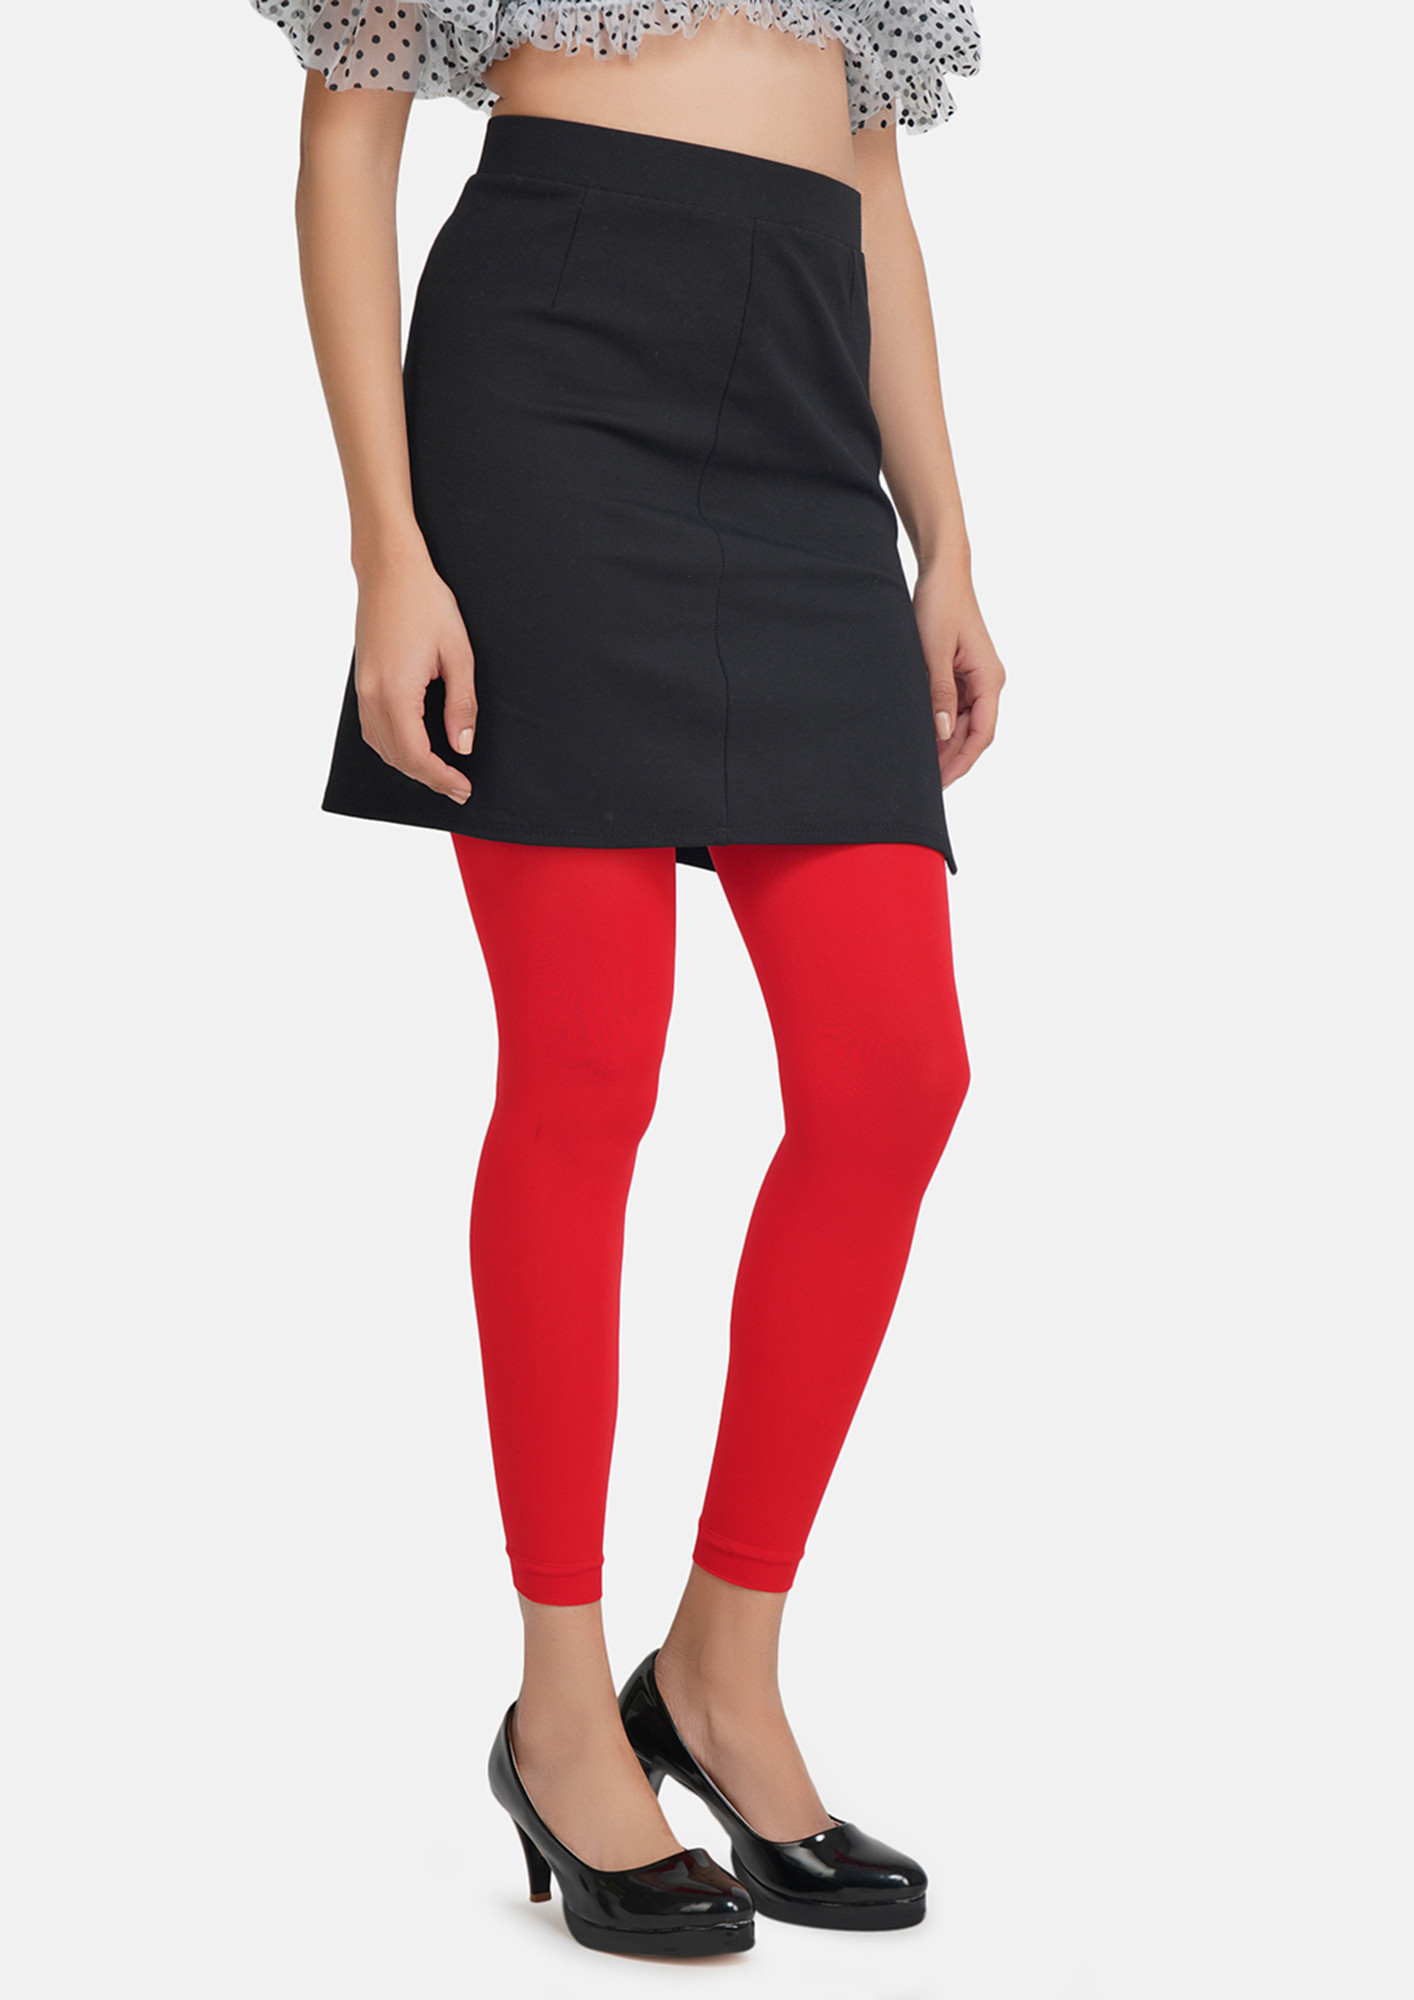 Buy N2S NEXT2SKIN Women's Nylon Opaque Pantyhose Stockings With